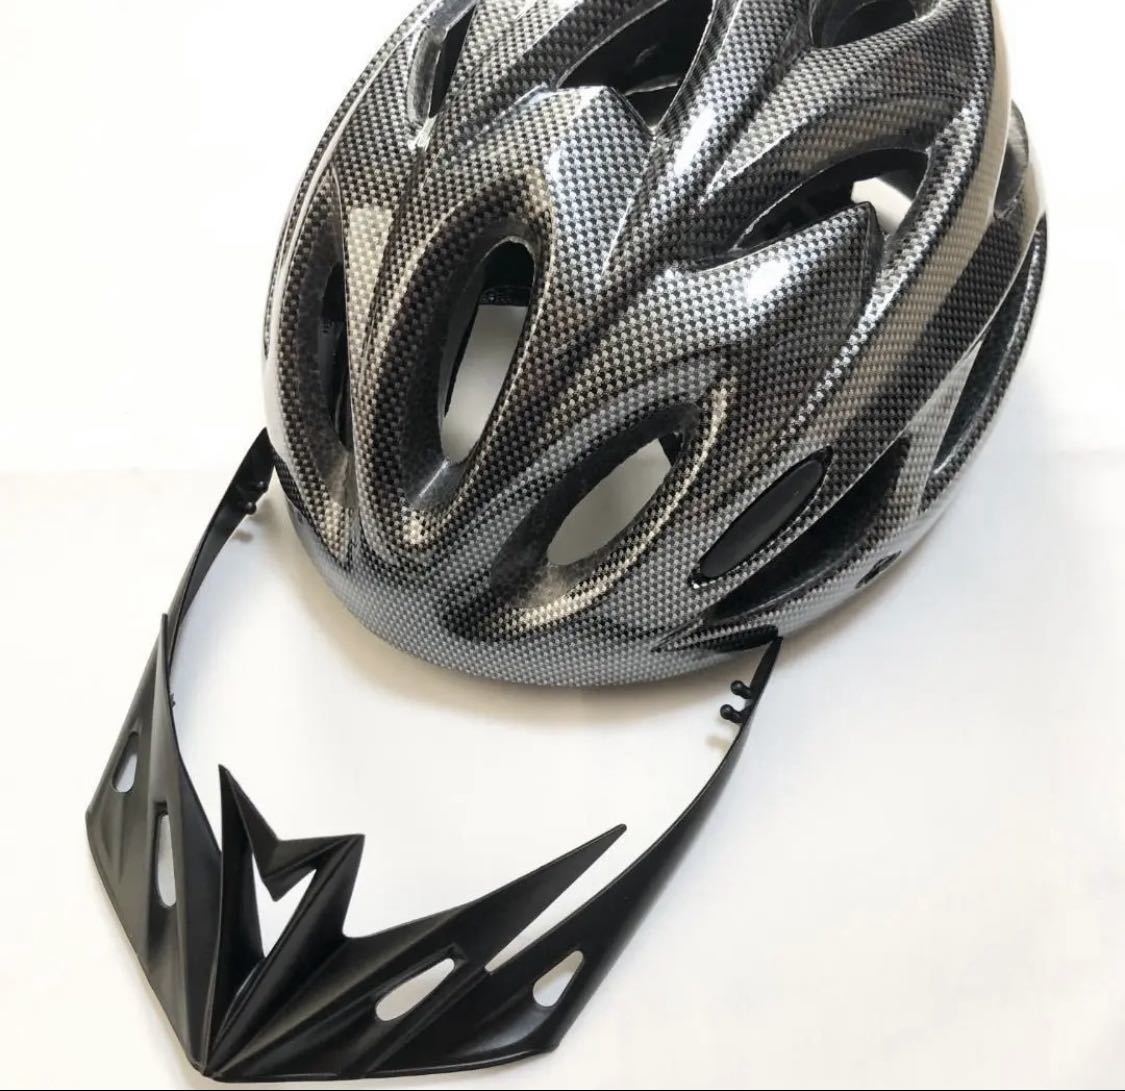  bicycle helmet for adult Impact-proof height ventilation cycling helmet super light weight road bike helmet sun visor attaching 